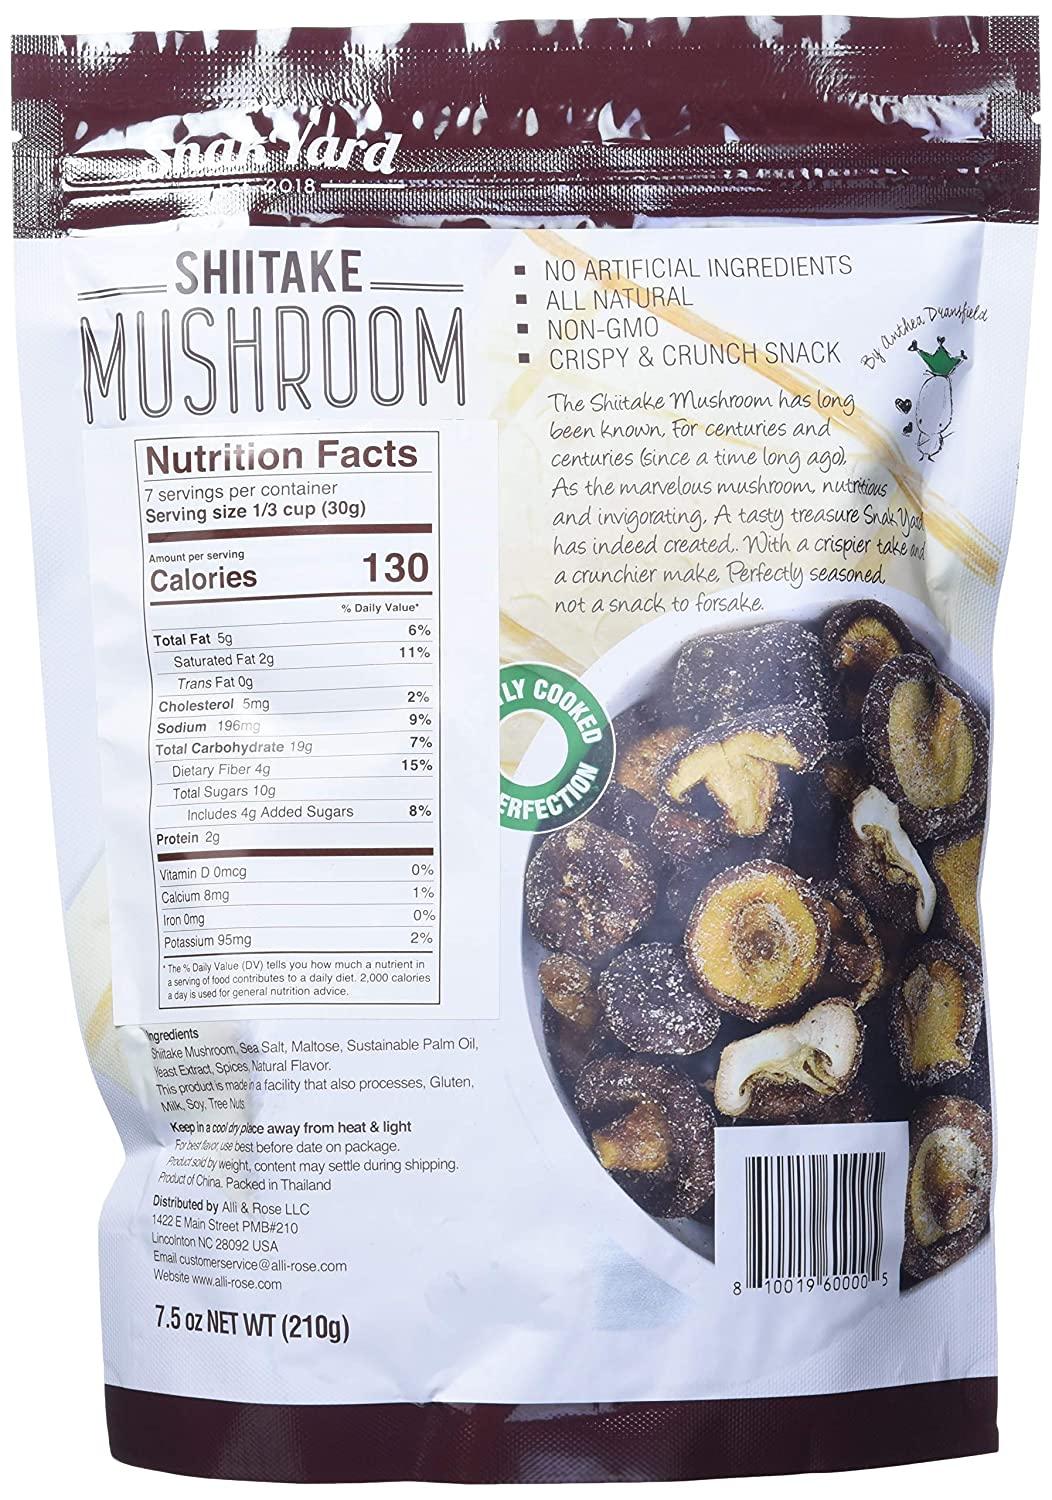 The Snak Yard Shitake Mushroom Crispy and Crunchy - 10.6 oz 